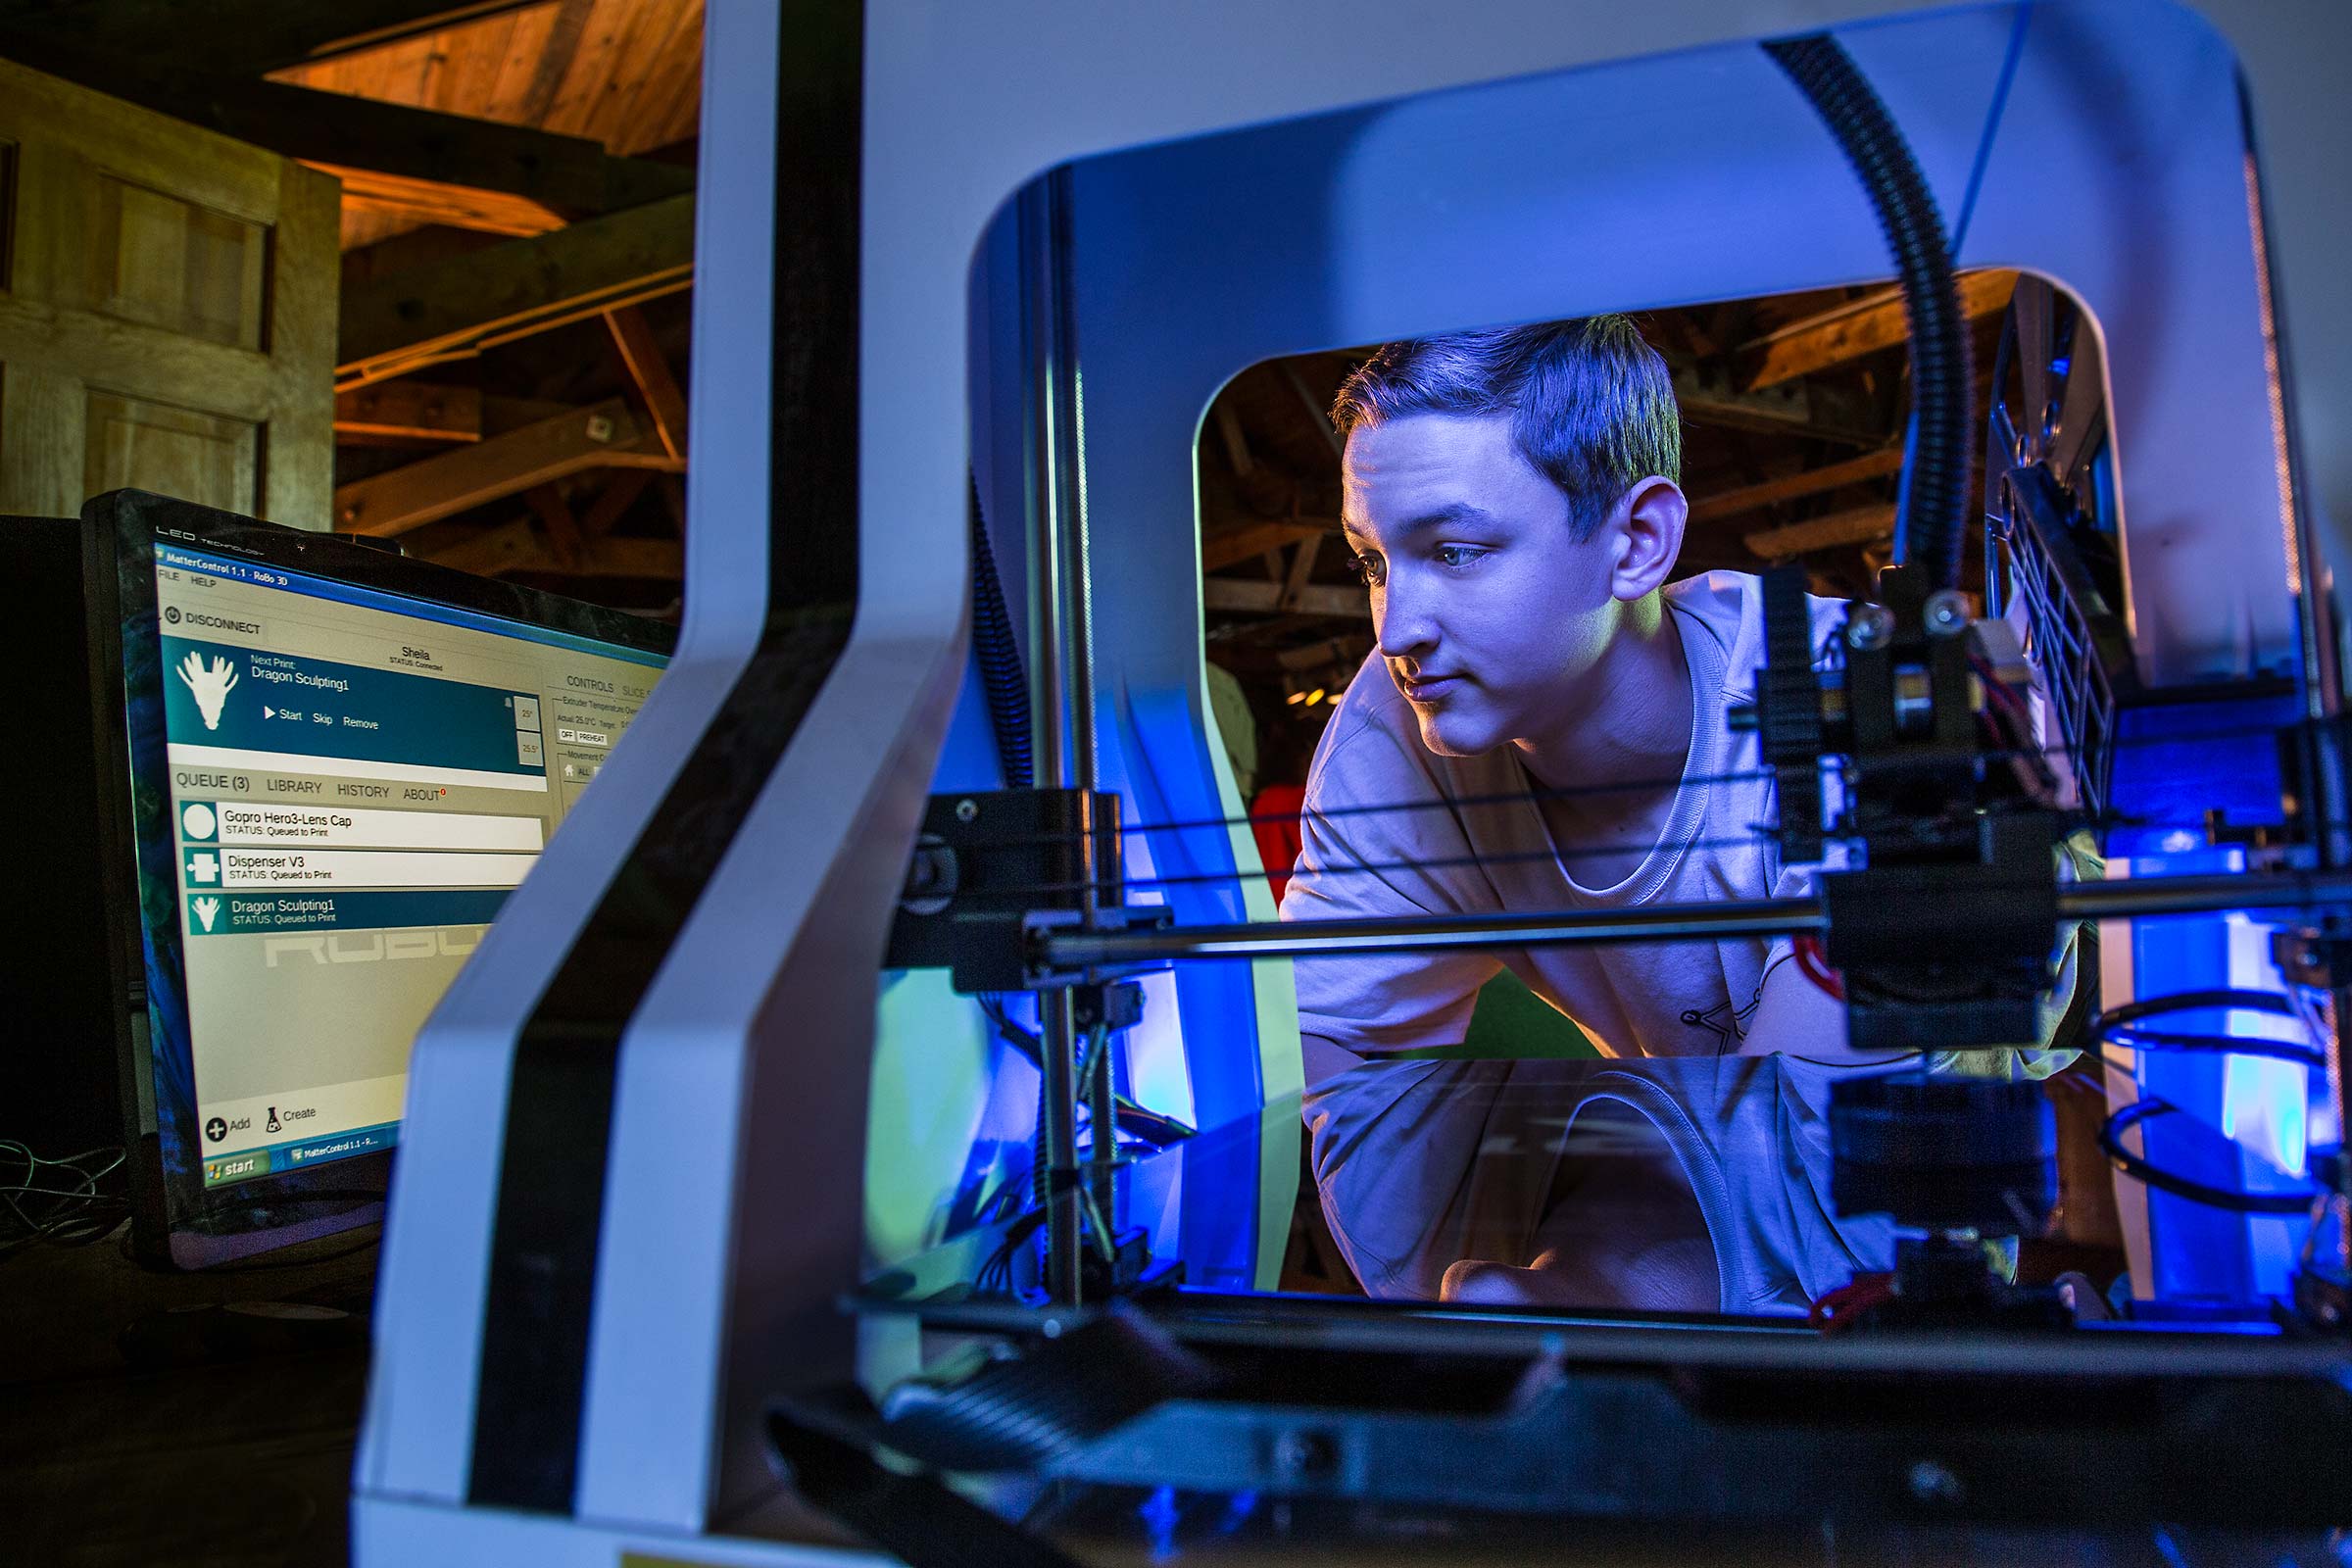 A teenage boy workign with a 3D printer in a STEM technologies program